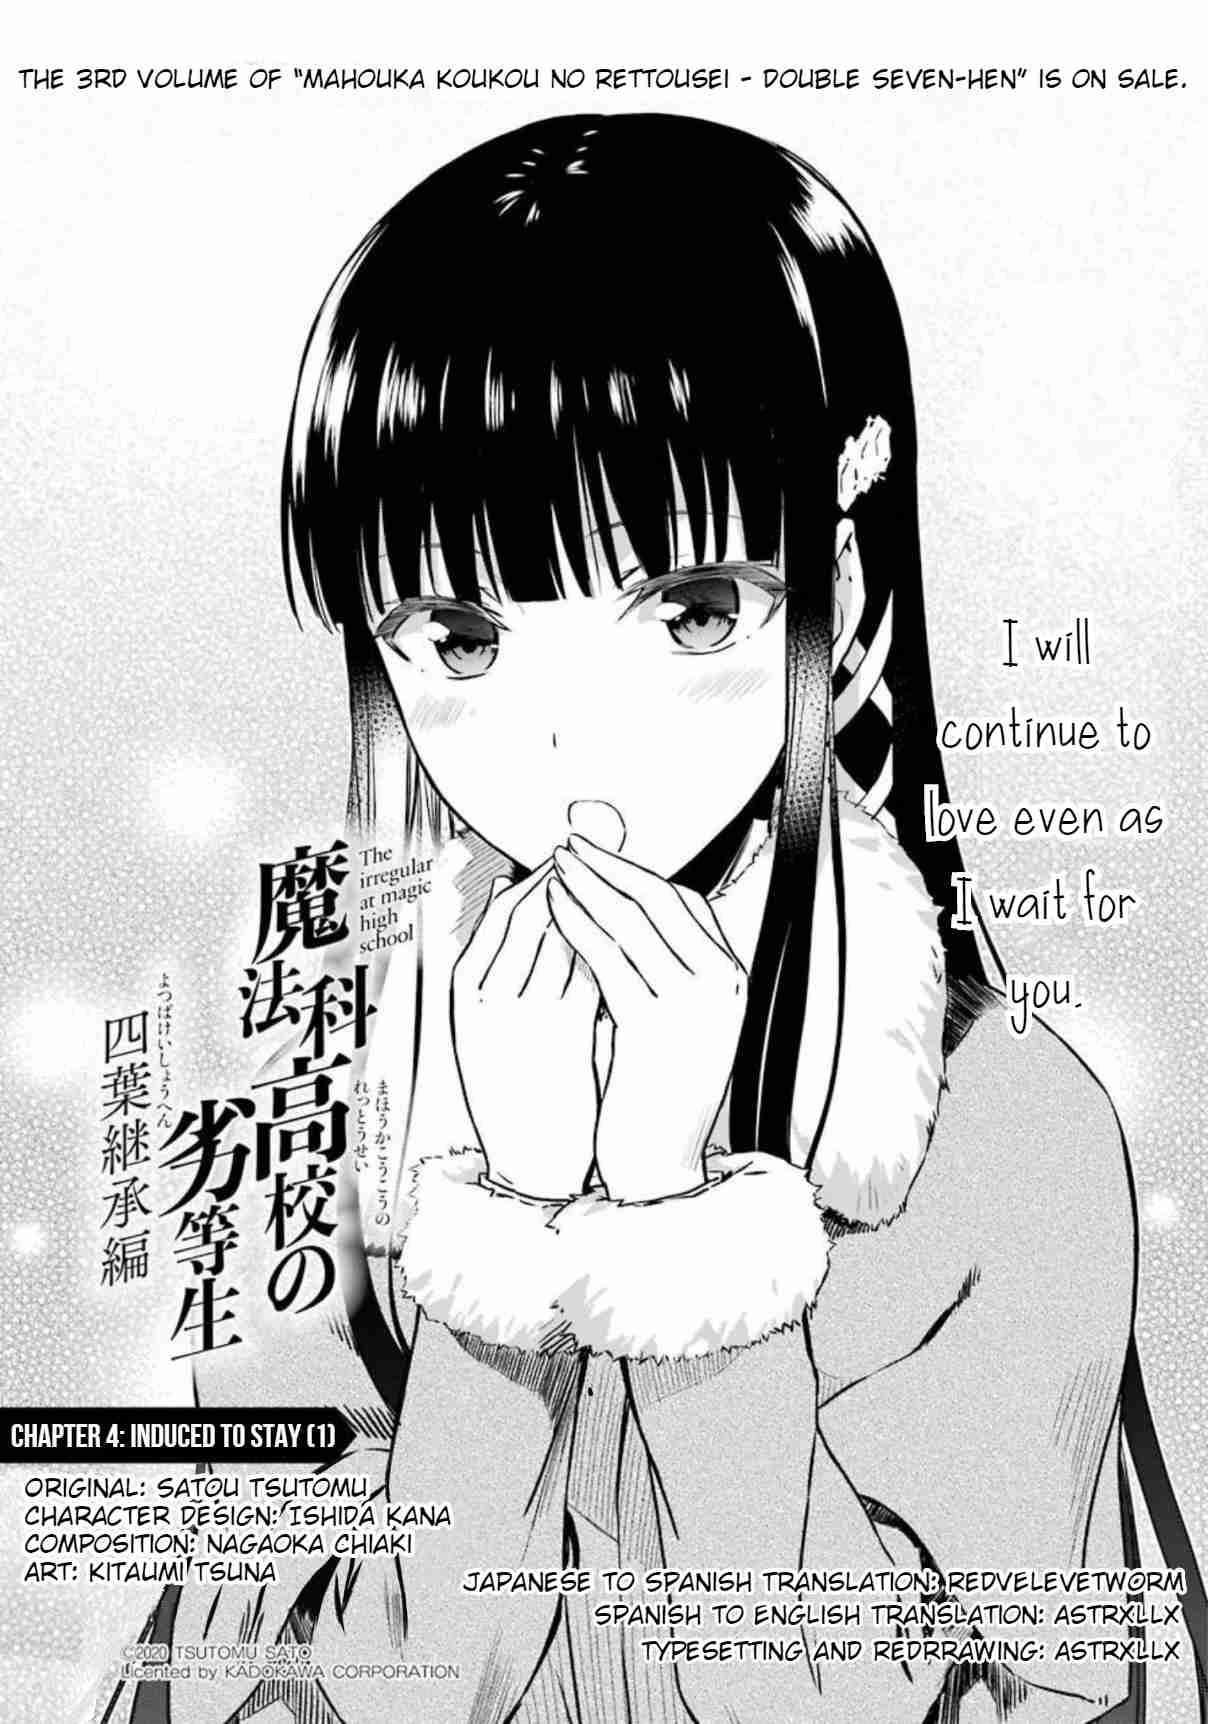 Mahouka Koukou no Rettousei Yotsuba Keishou hen Vol. 1 Ch. 4 Induced to Stay (1)